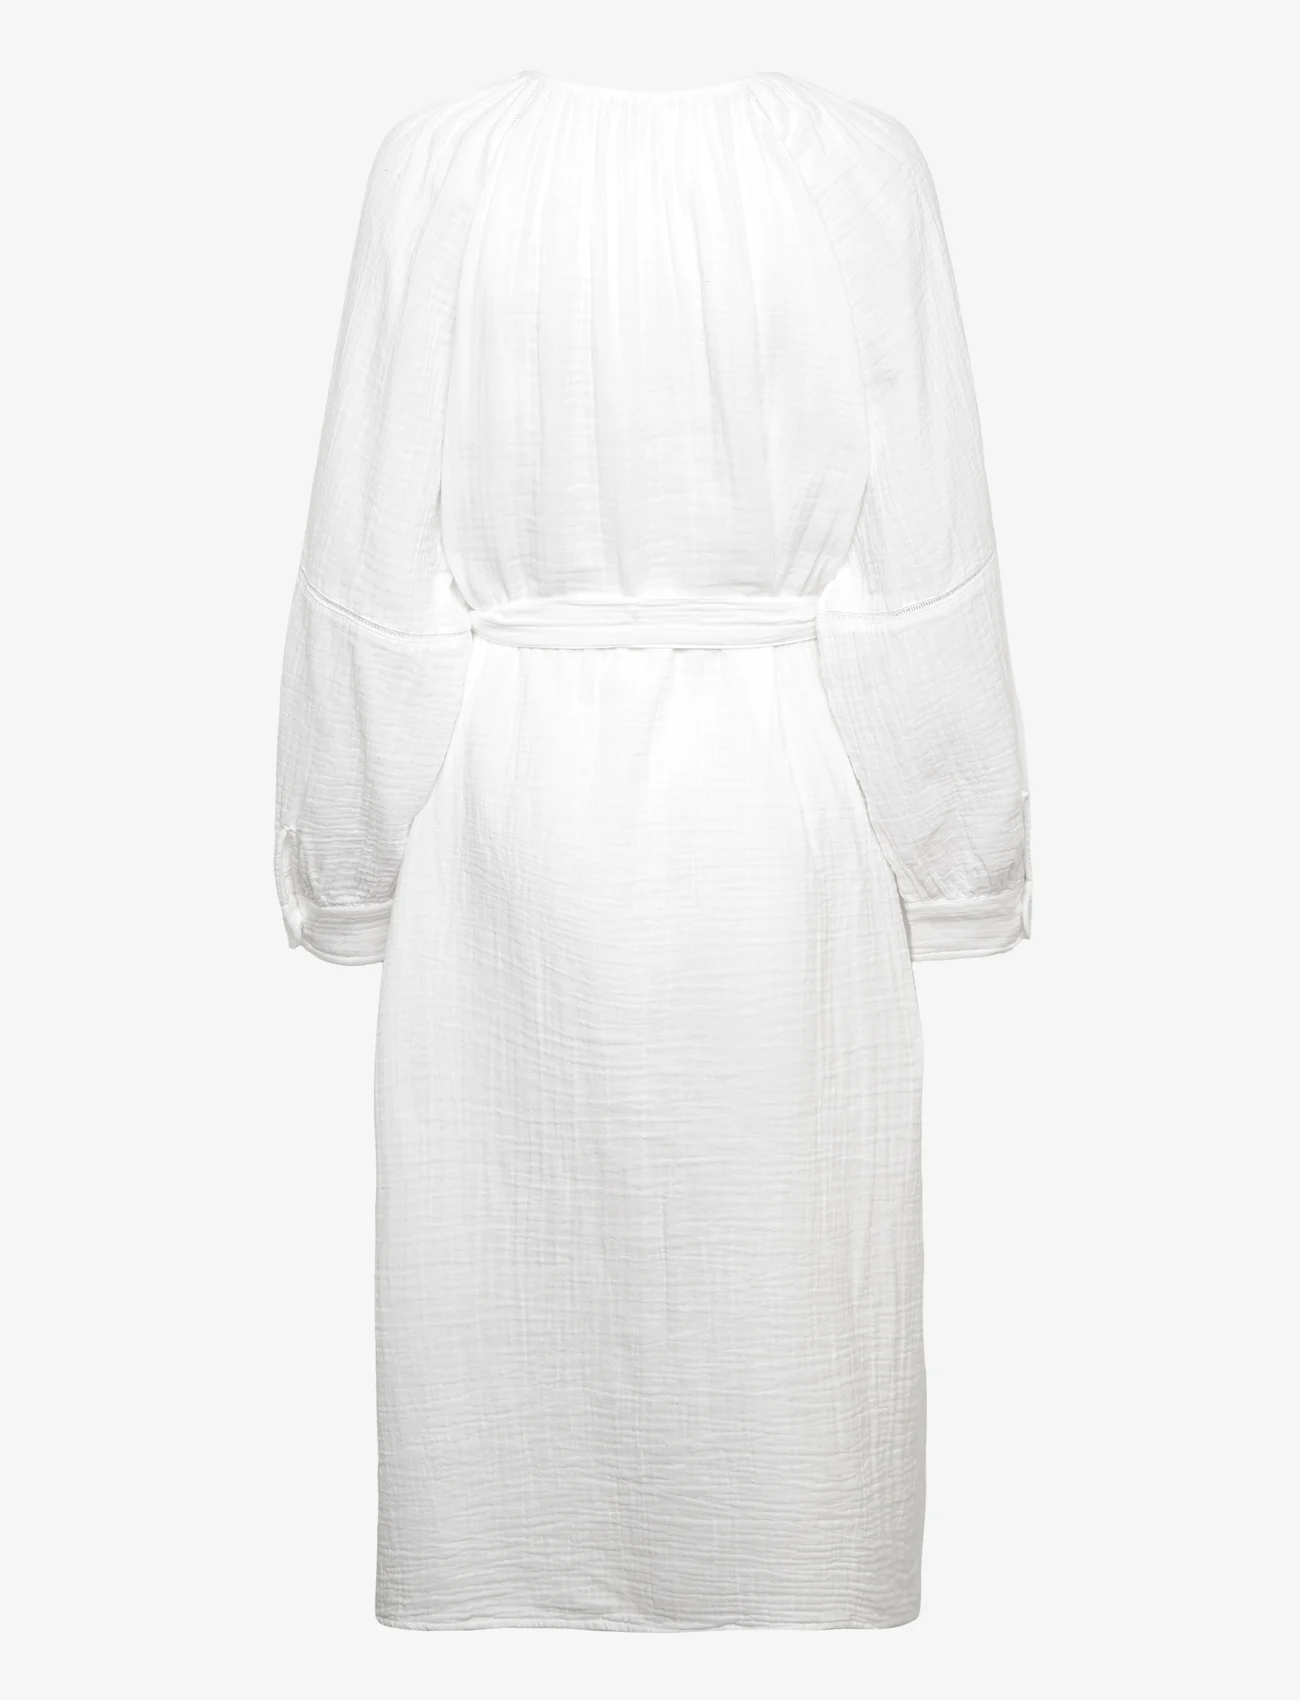 Mango - Belt cotton dress - kesämekot - white - 1